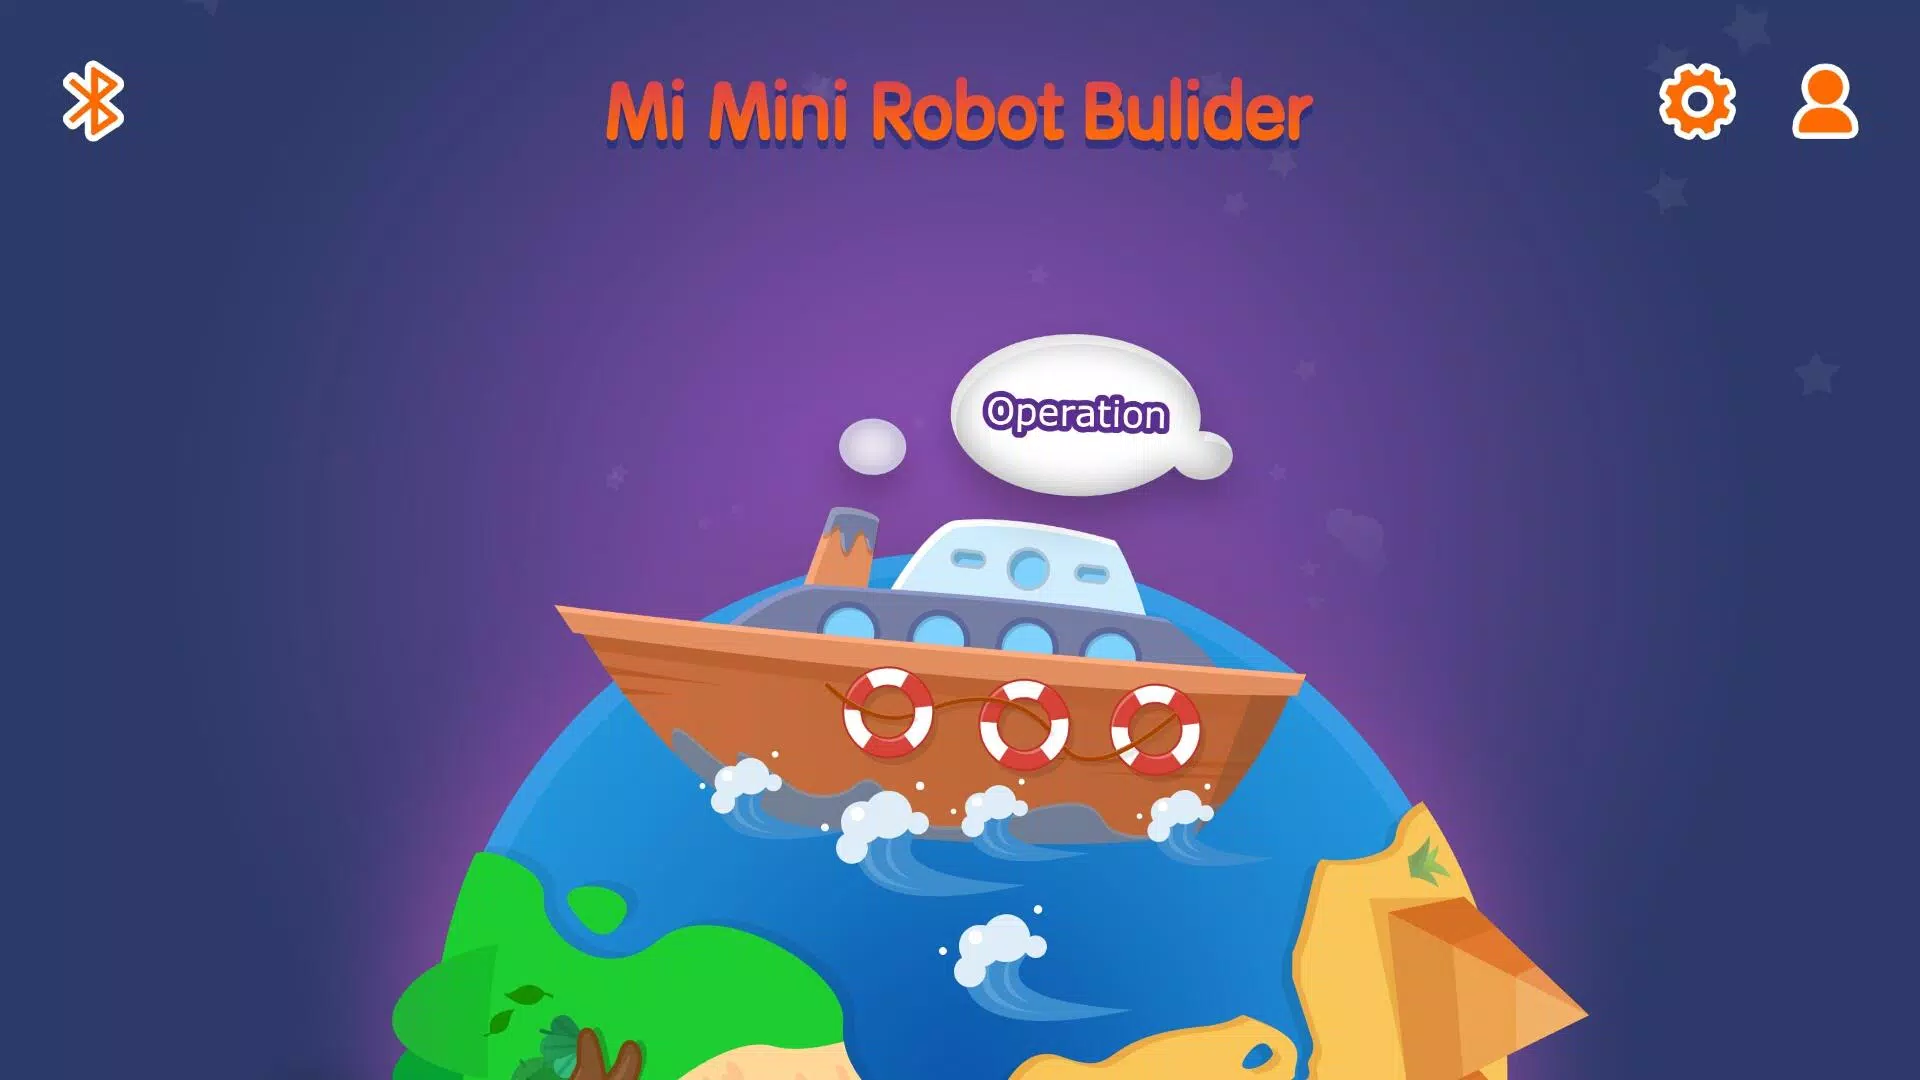 Mi Mini Robot Builder for Android - APK Download